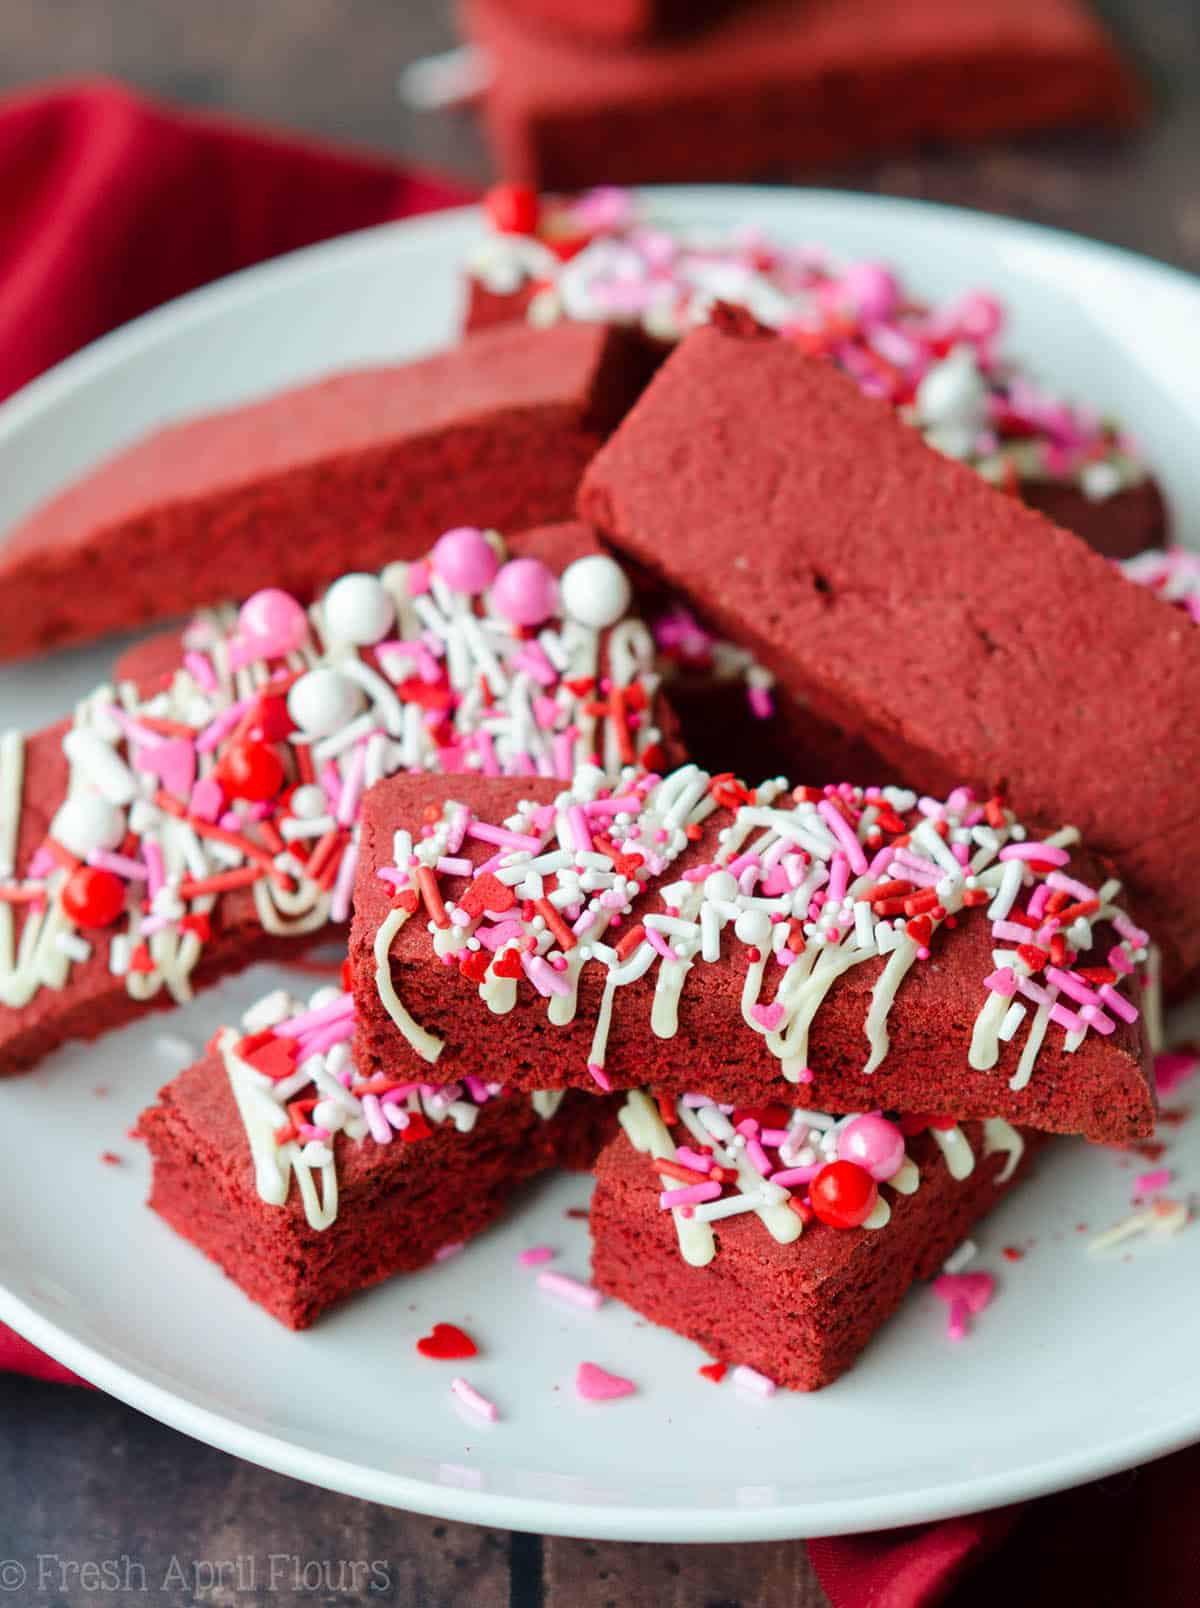 Red Velvet Biscotti: A Valentine's Day twist on classic biscotti using red velvet cake mix.